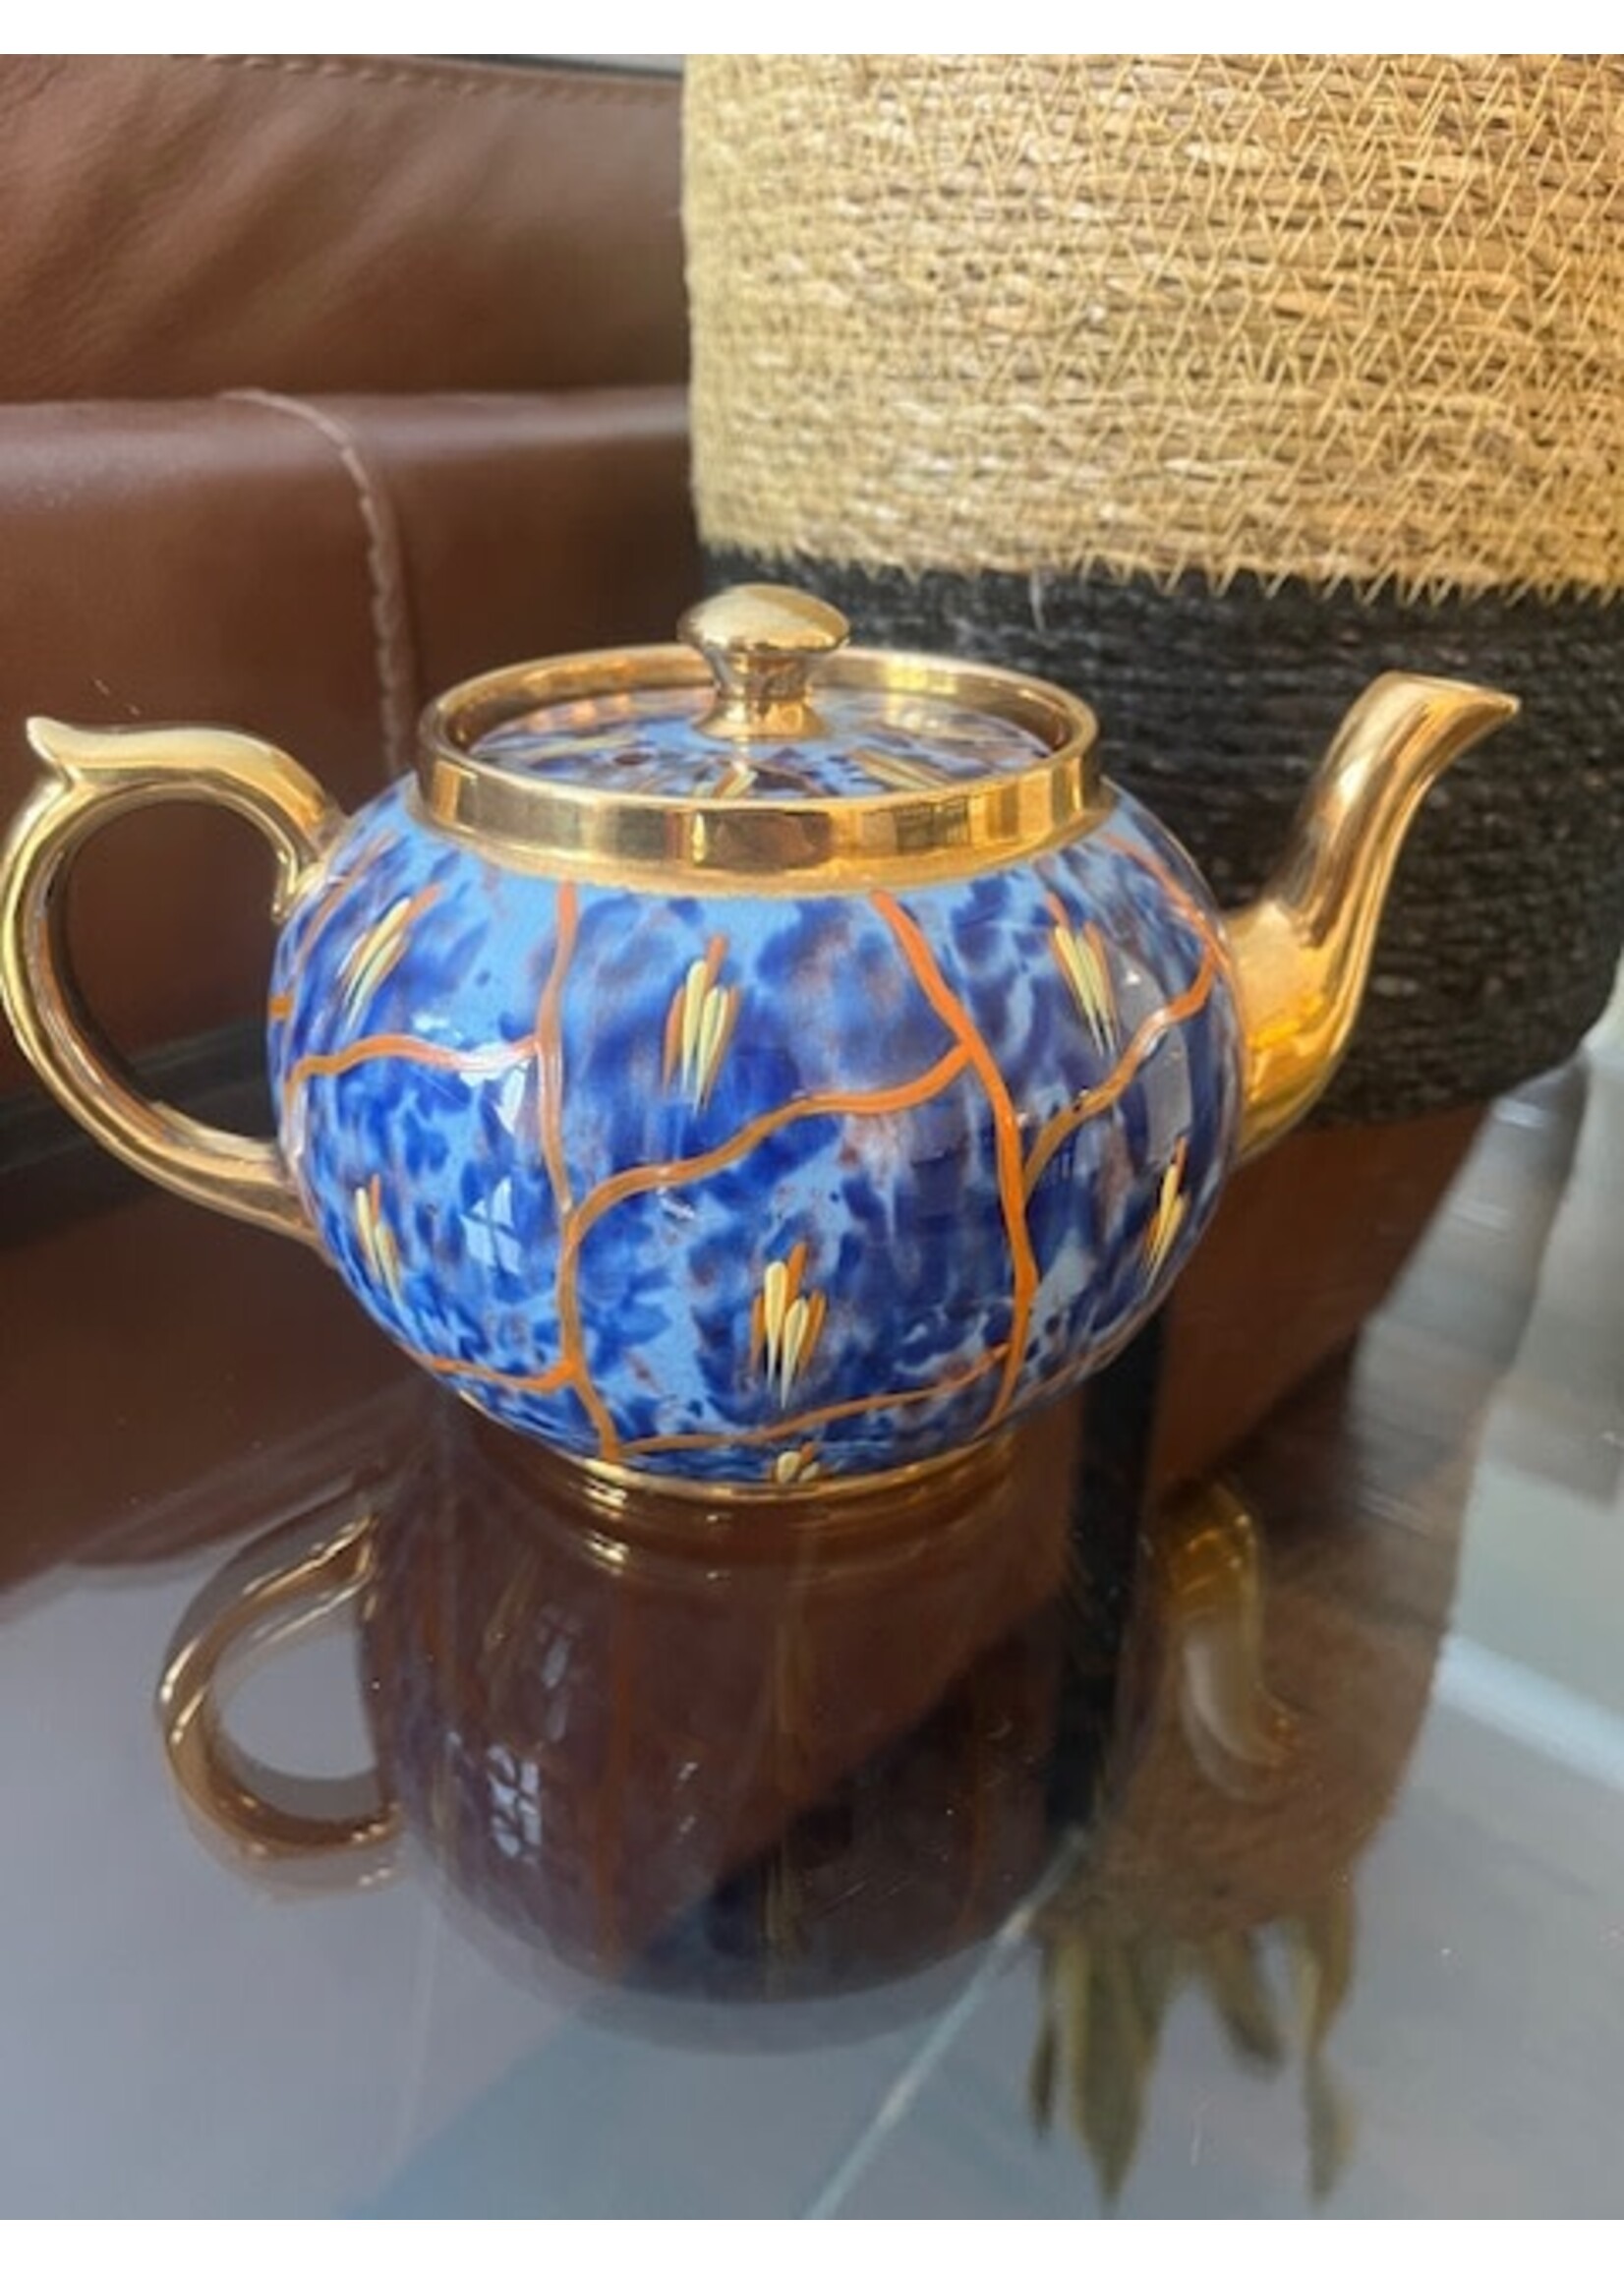 4 Cup Teapot - Blue w Gold